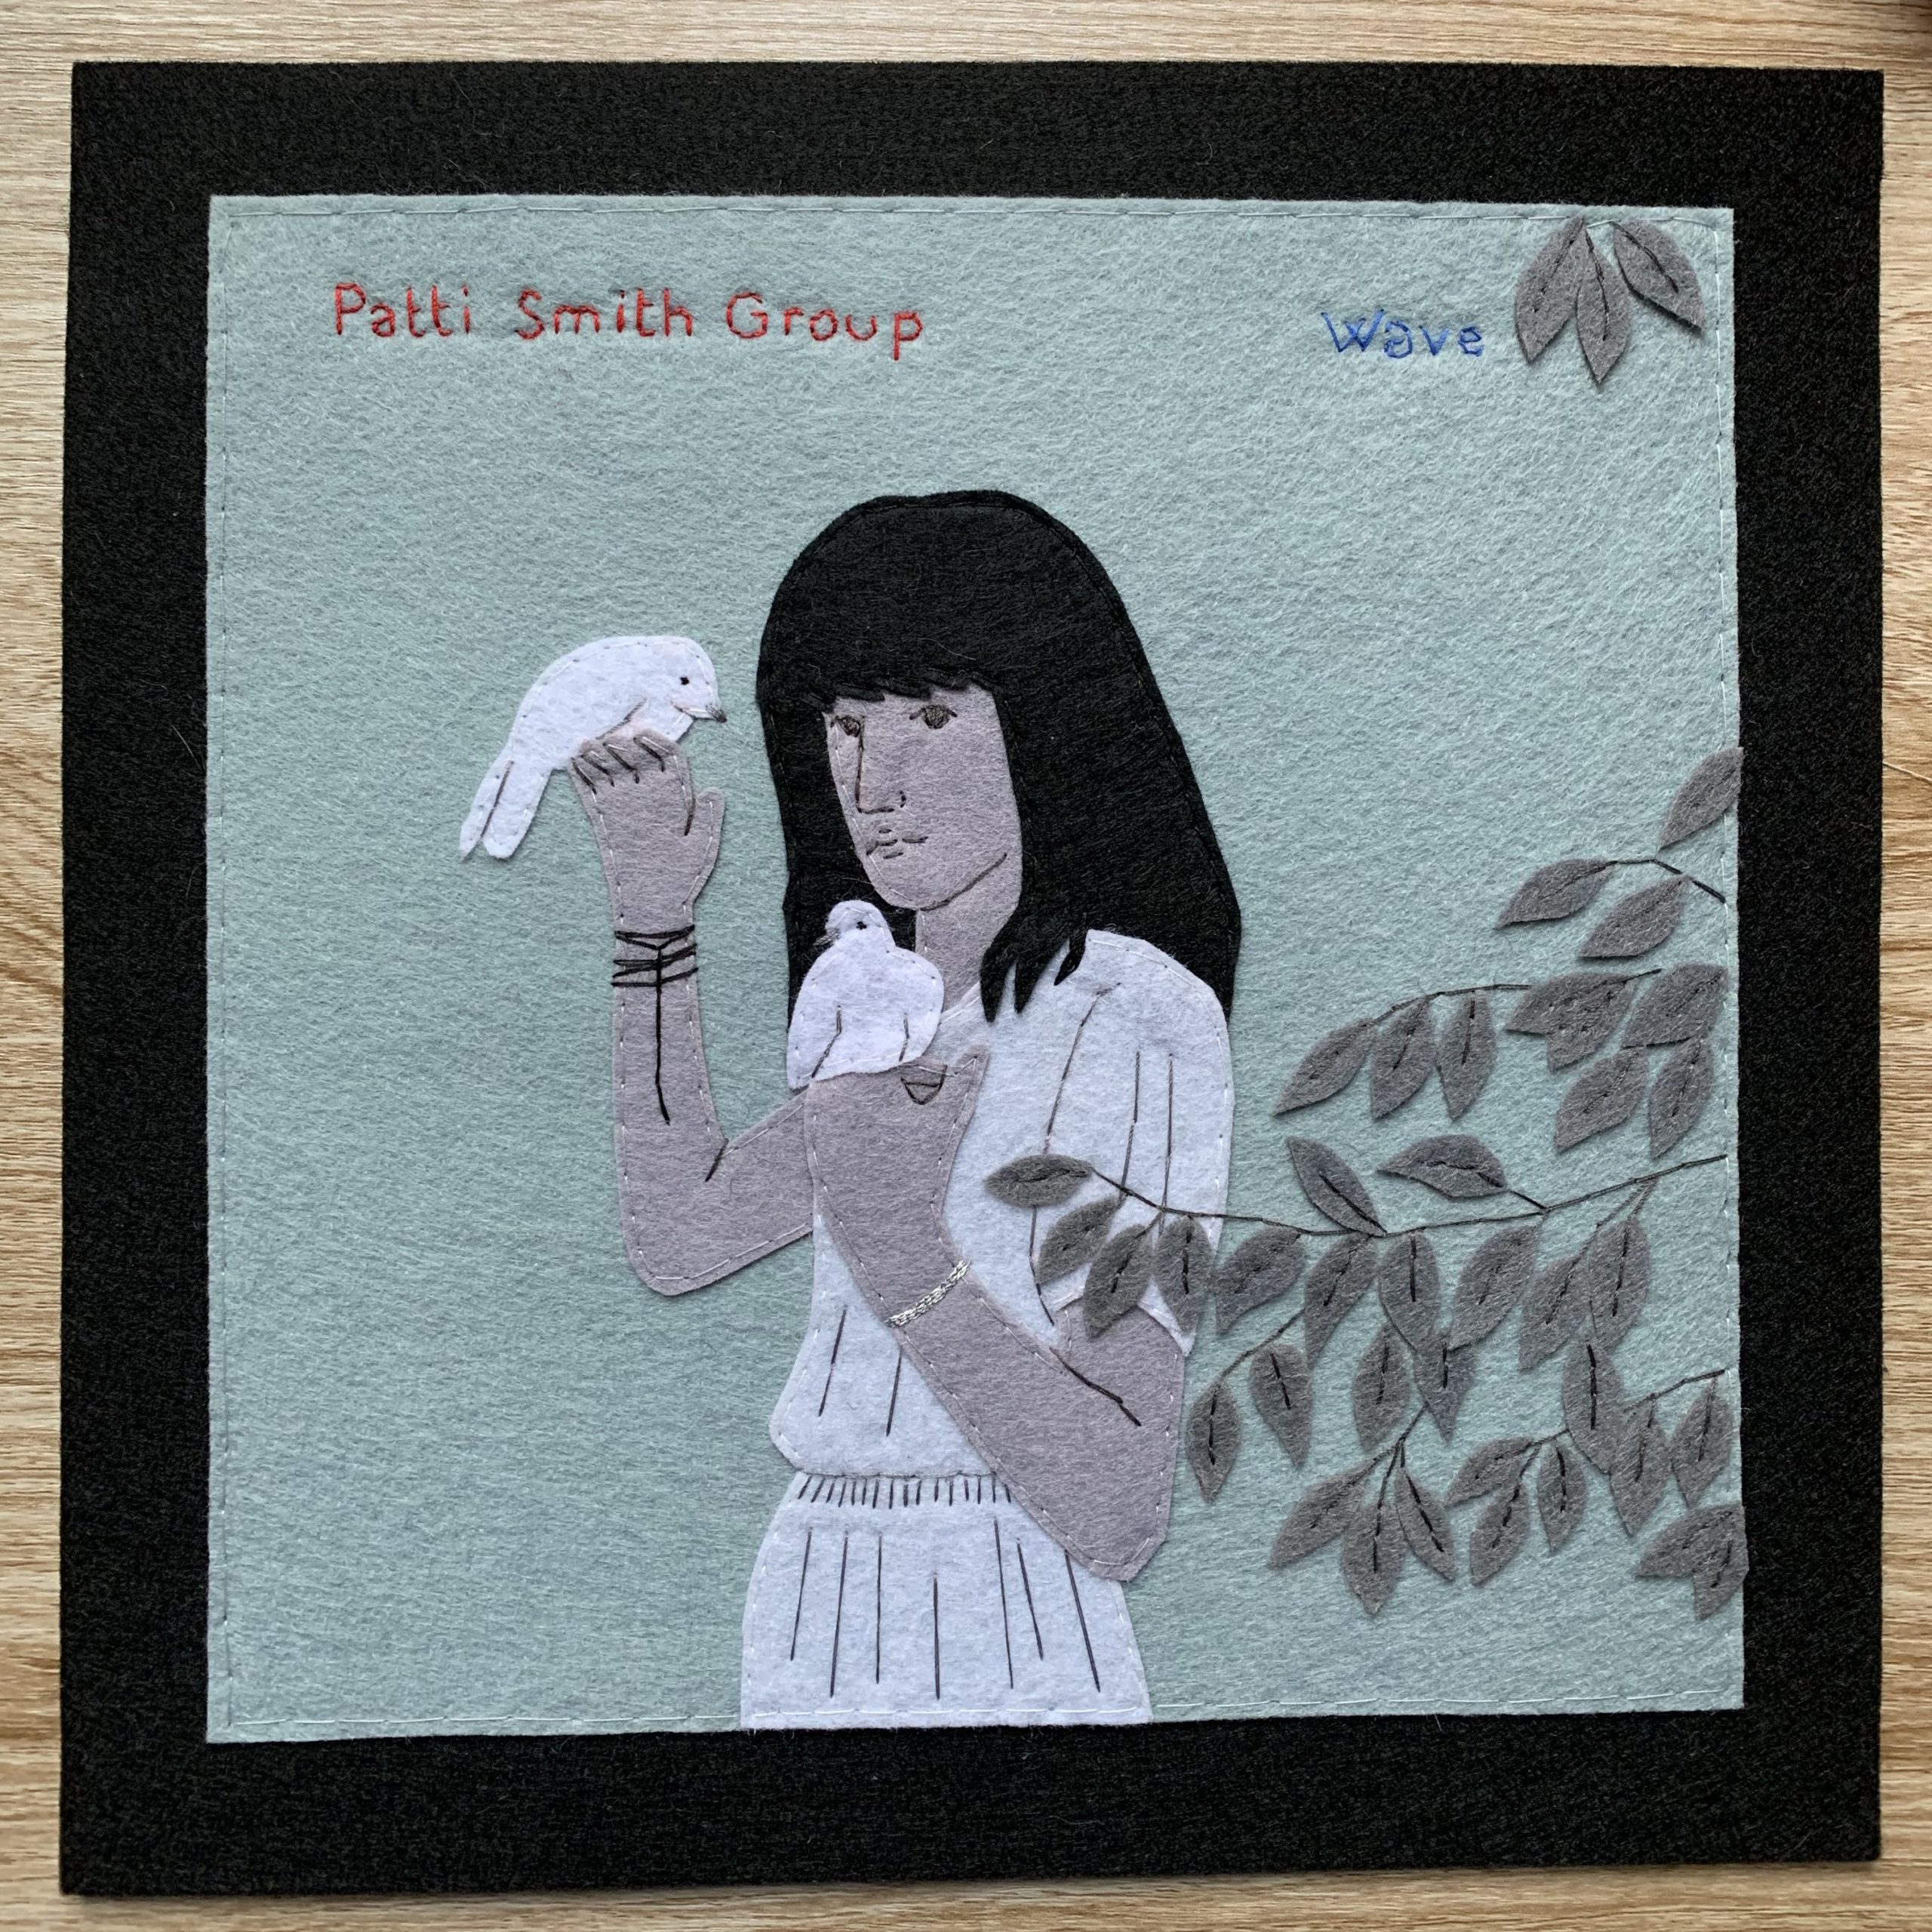 Patti Smith Group – Wave (1979)